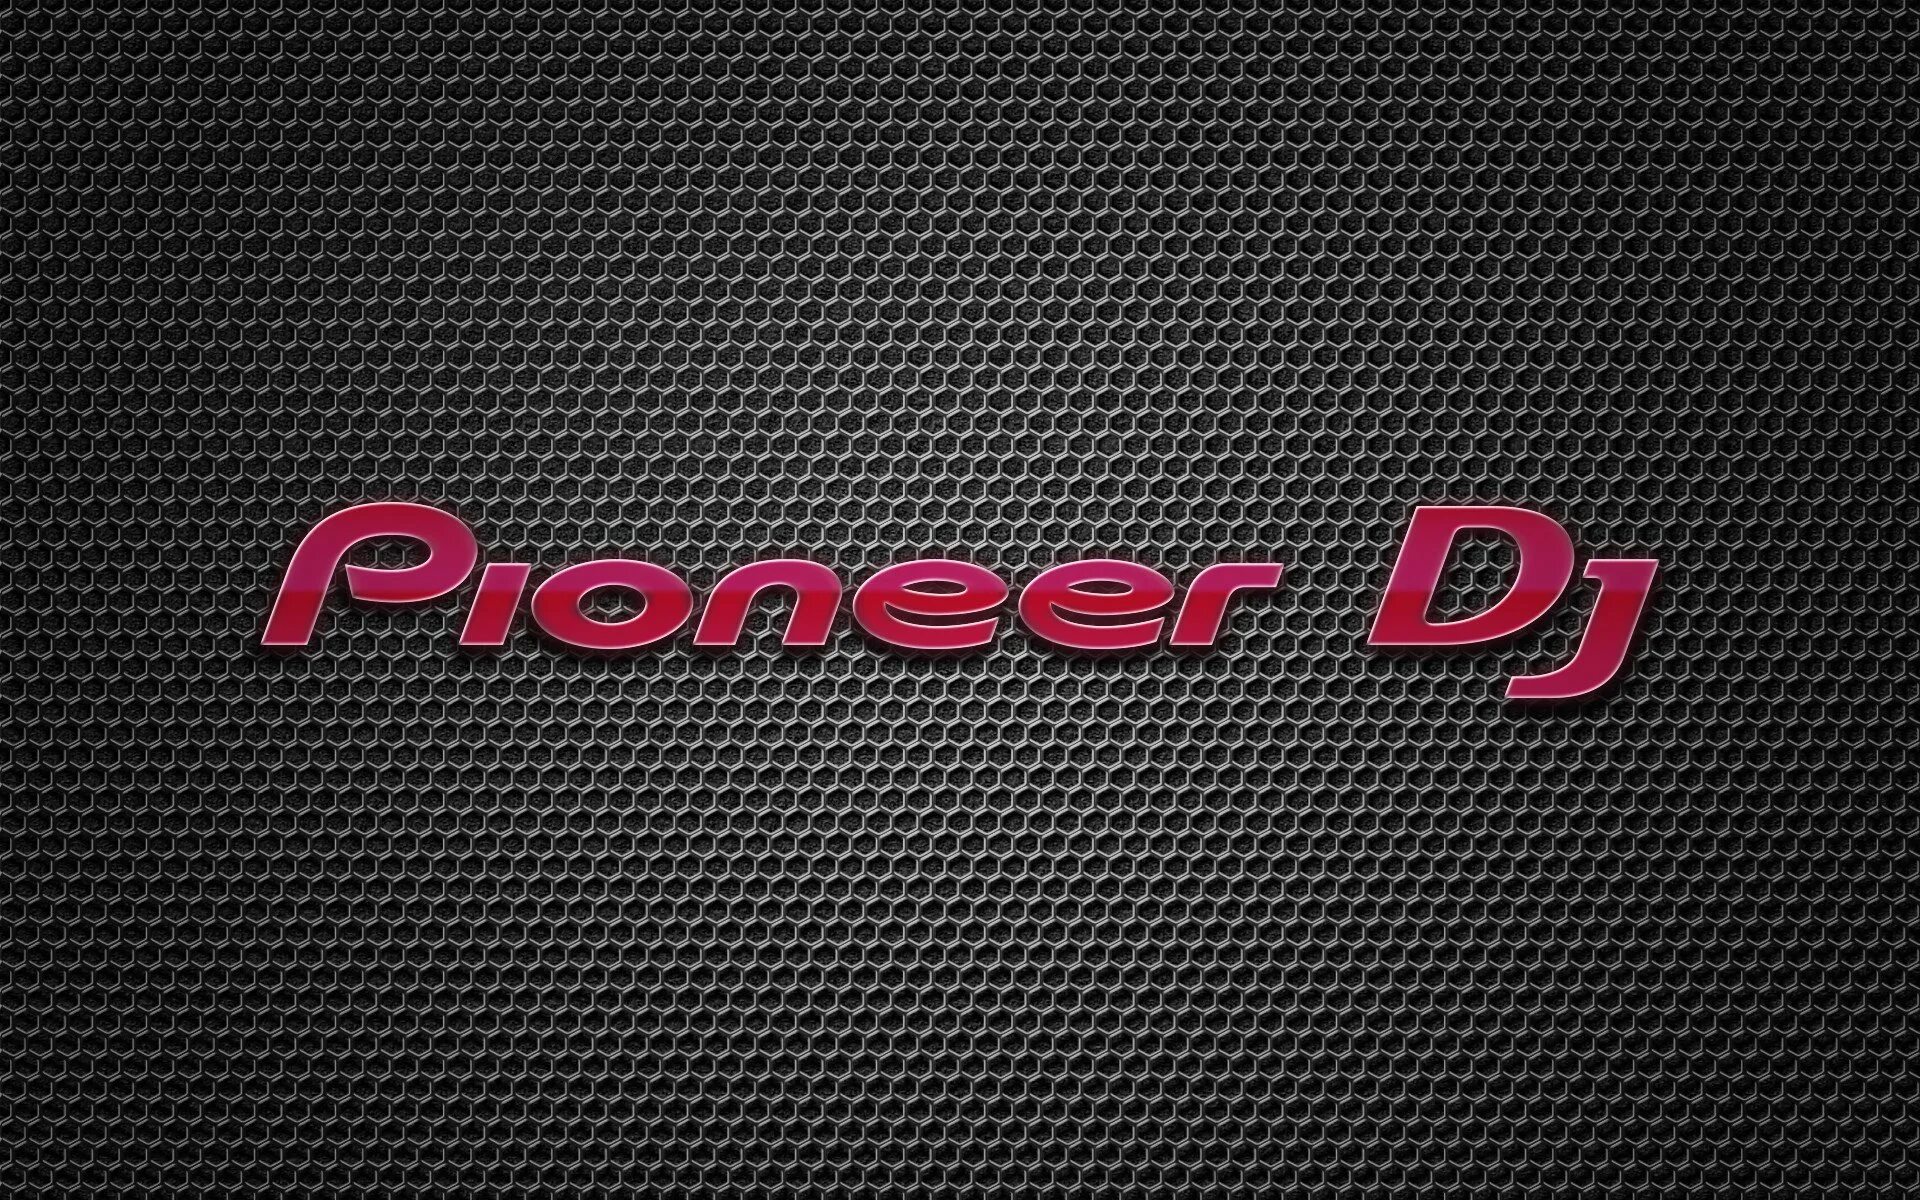 Логотип на заставку магнитолы. Обои для автомагнитолы. Пионер логотип. Pioneer DJ обои. Pioneer надпись.